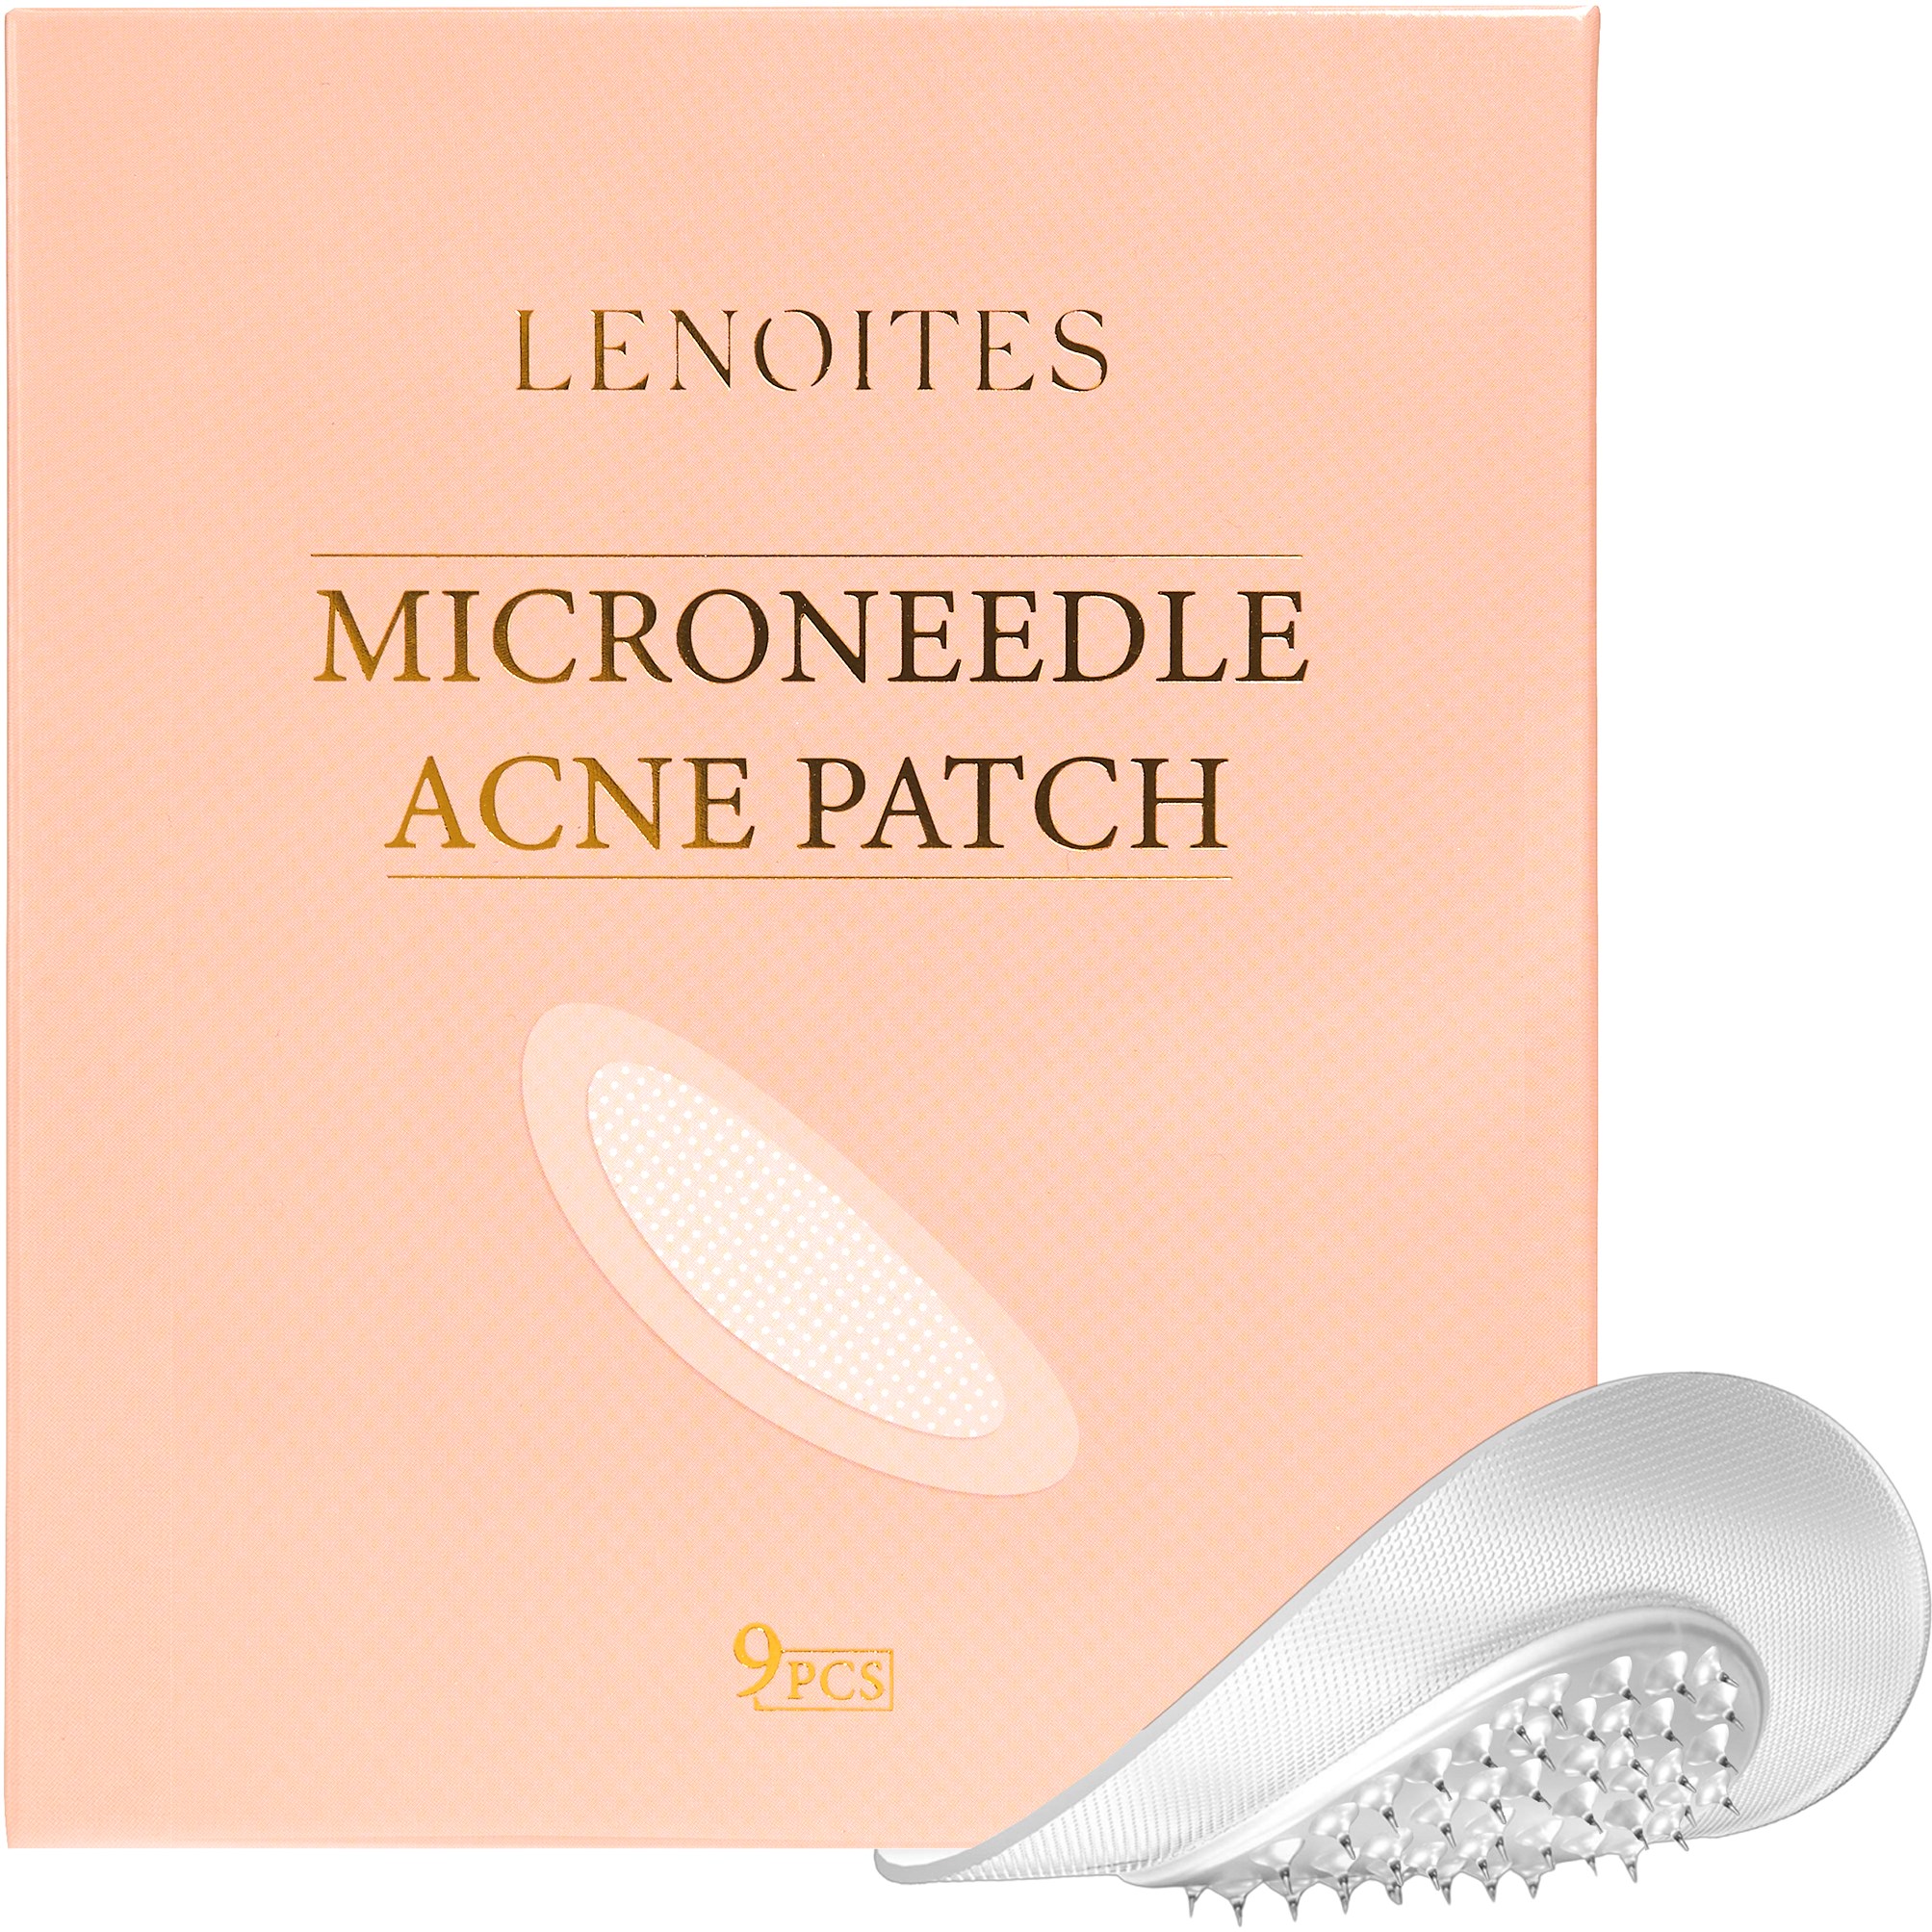 Läs mer om Lenoites Microneedle Acne Patch